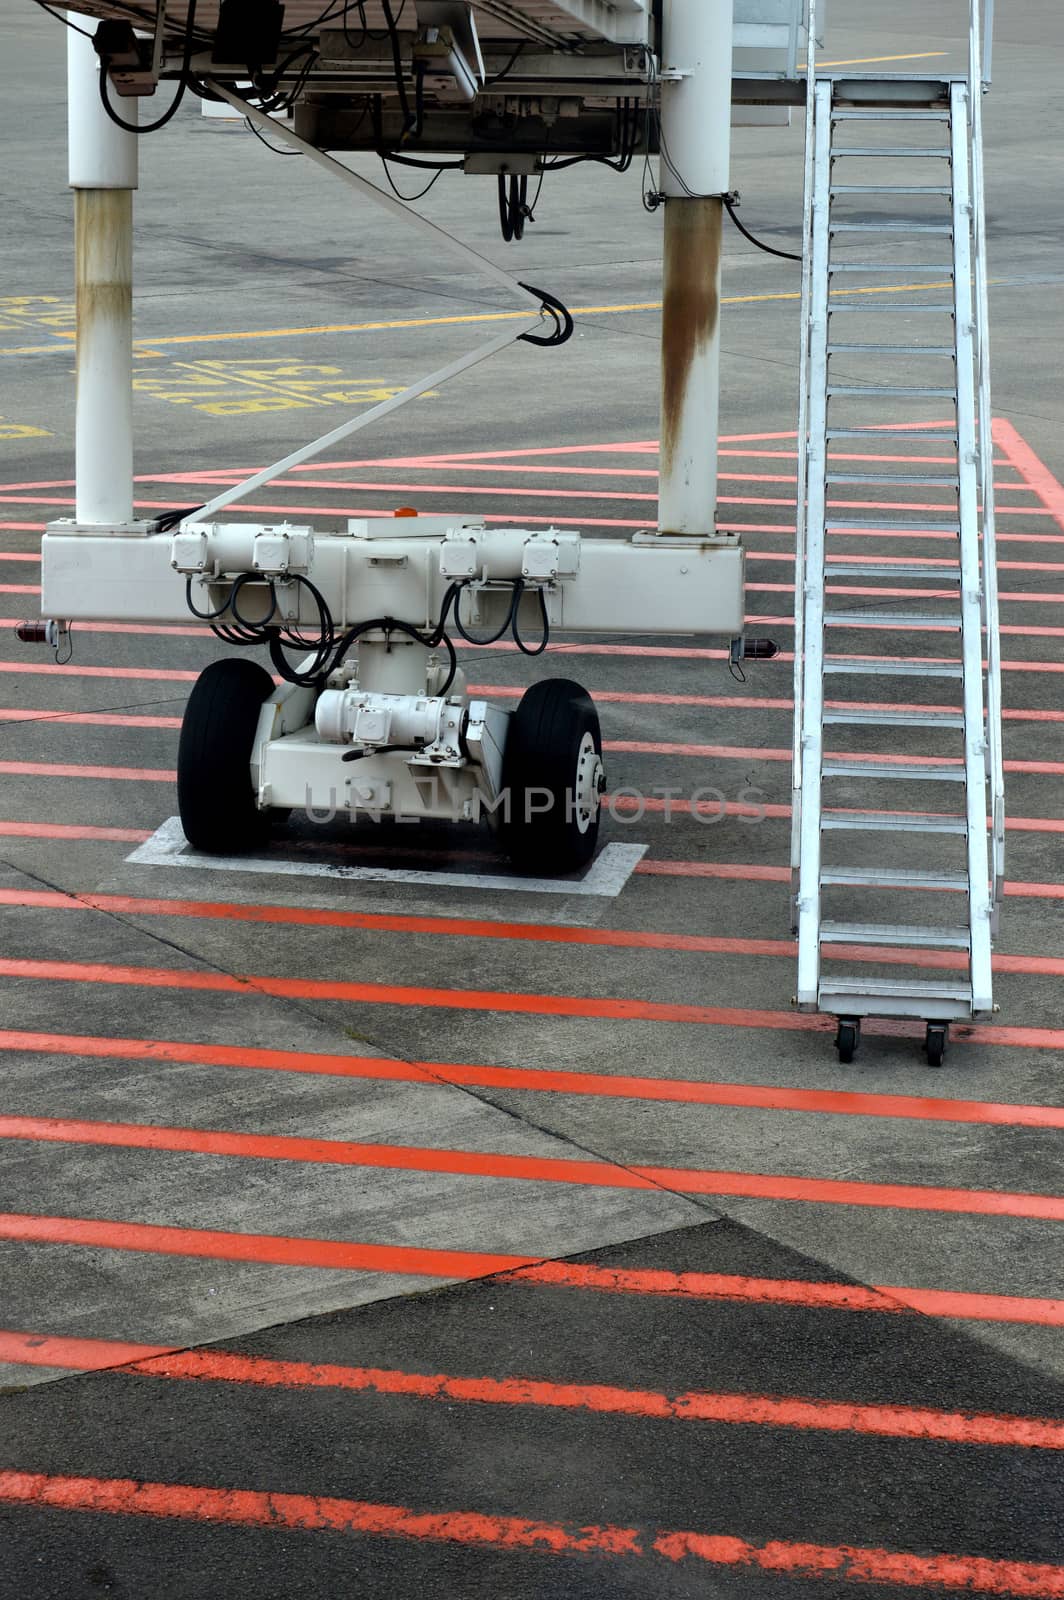 aircraft wheels on the airport runway